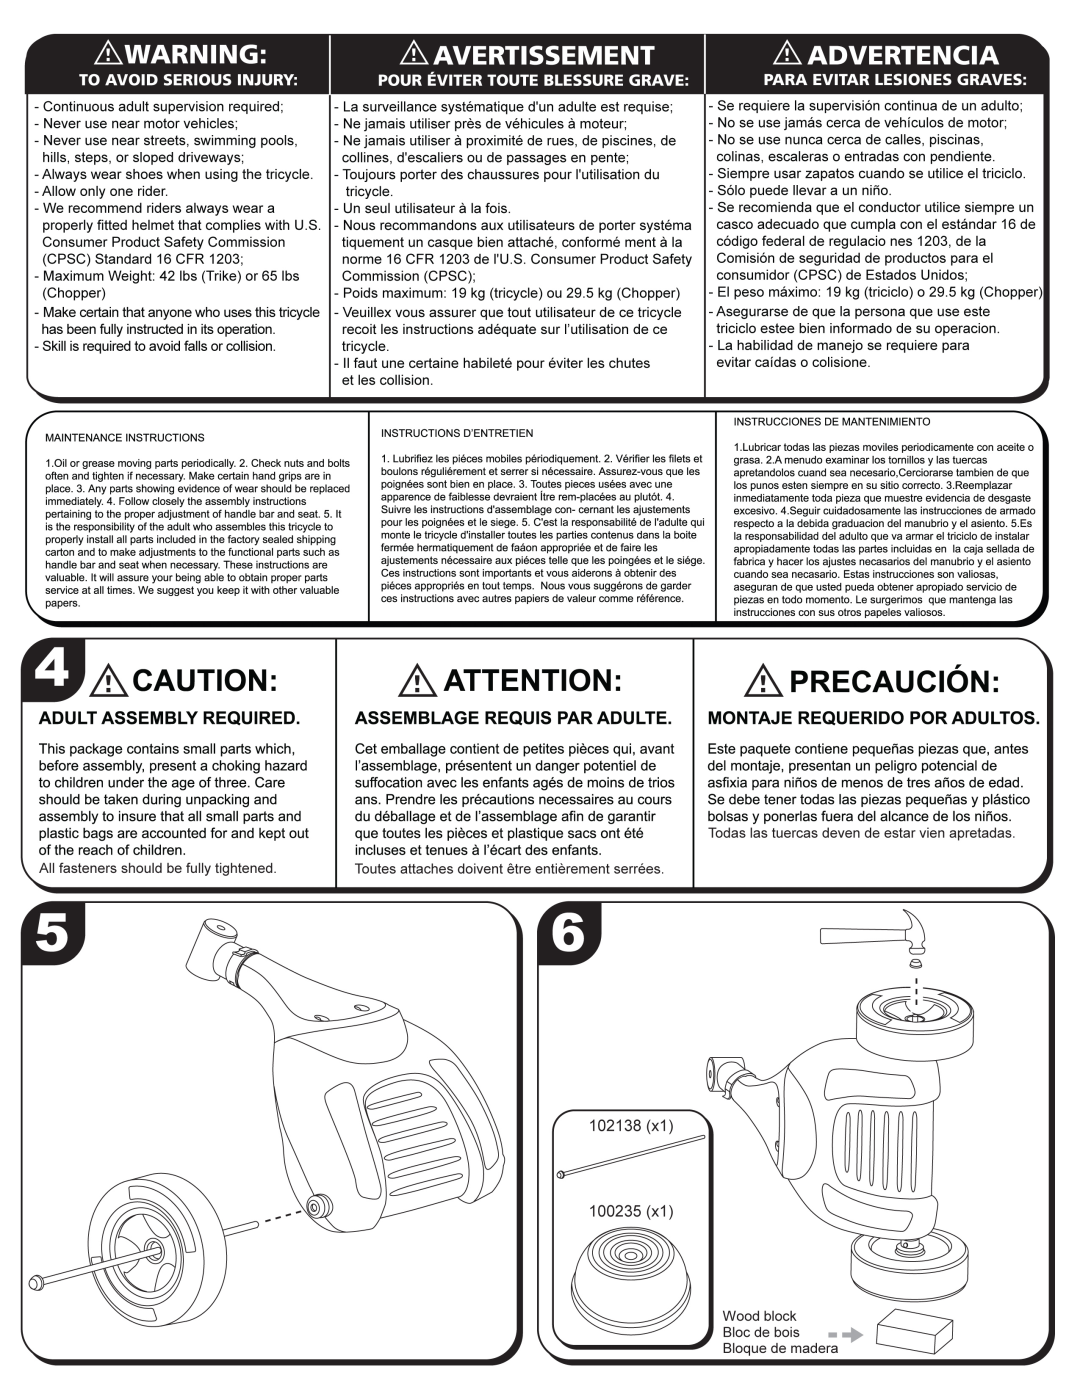 Radio Flyer 442 manual 